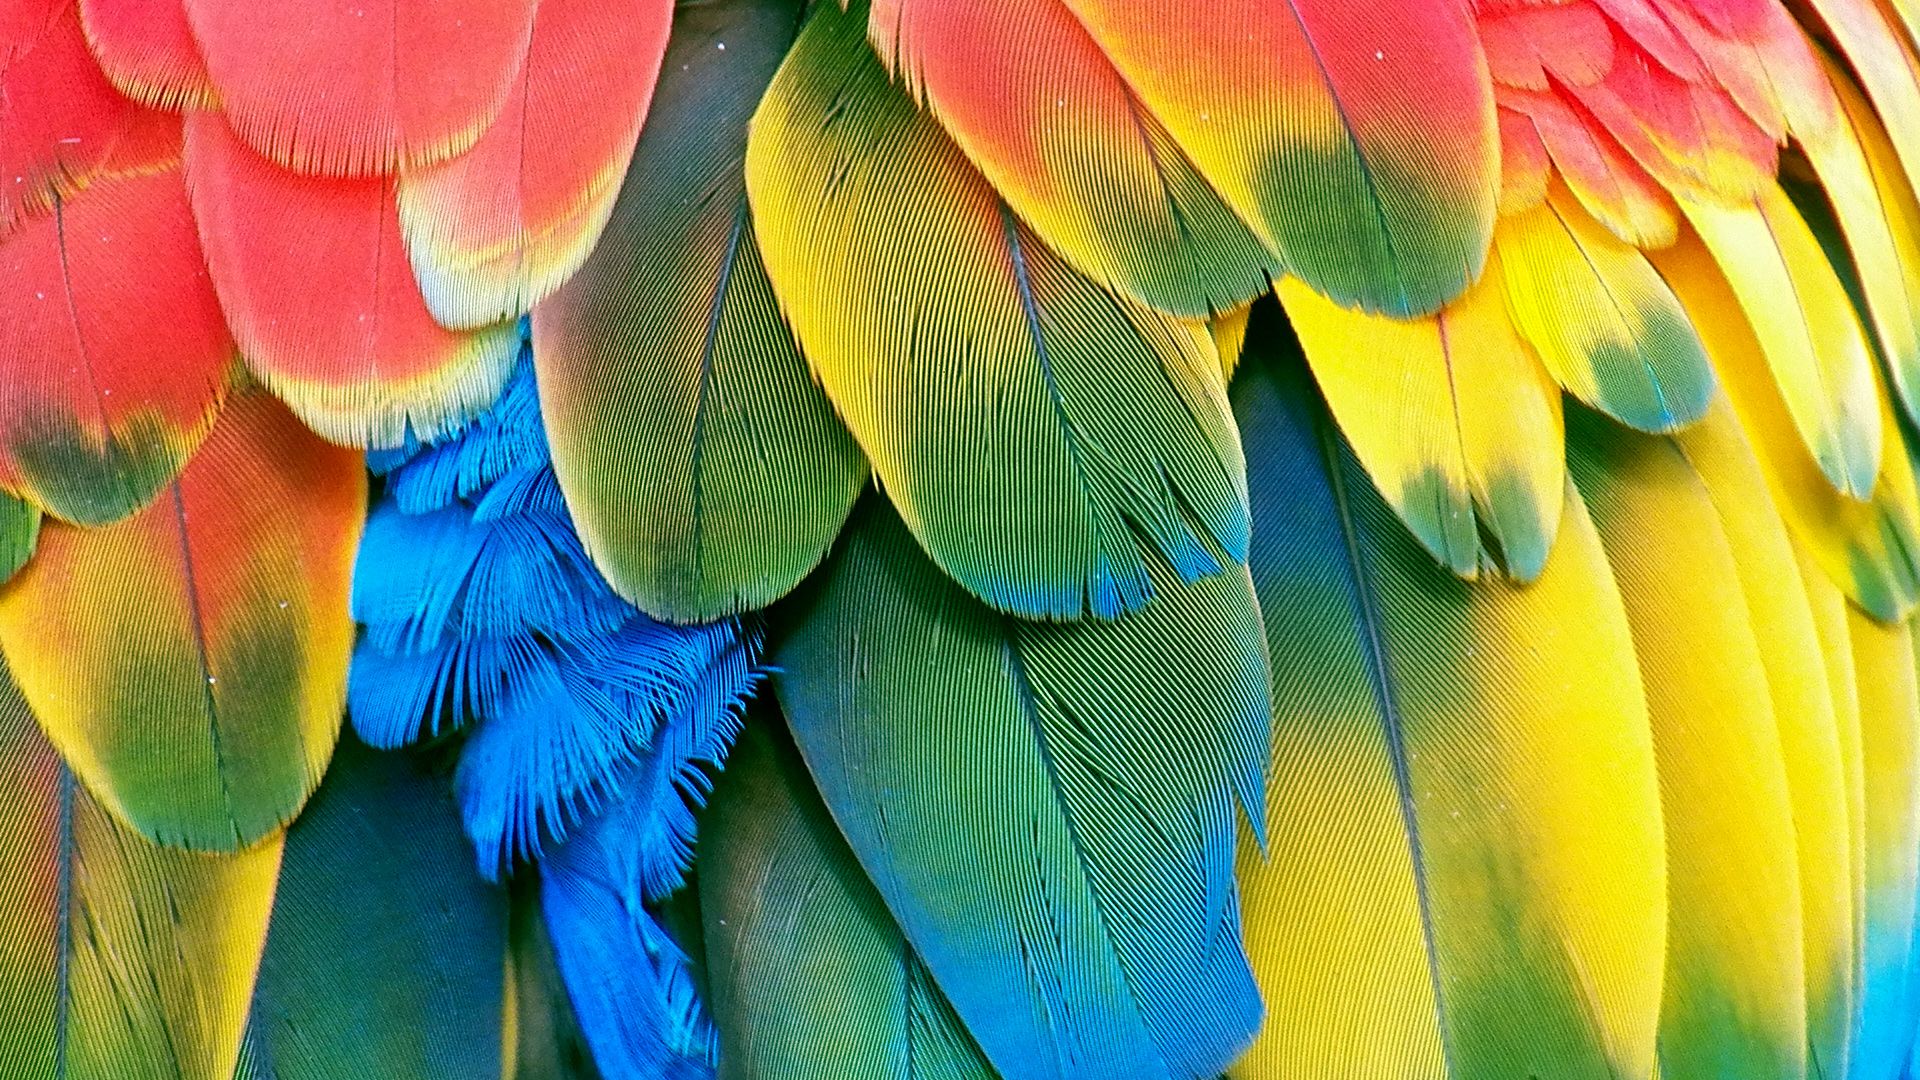 51 Parrot Feather Wallpaper  WallpaperSafari